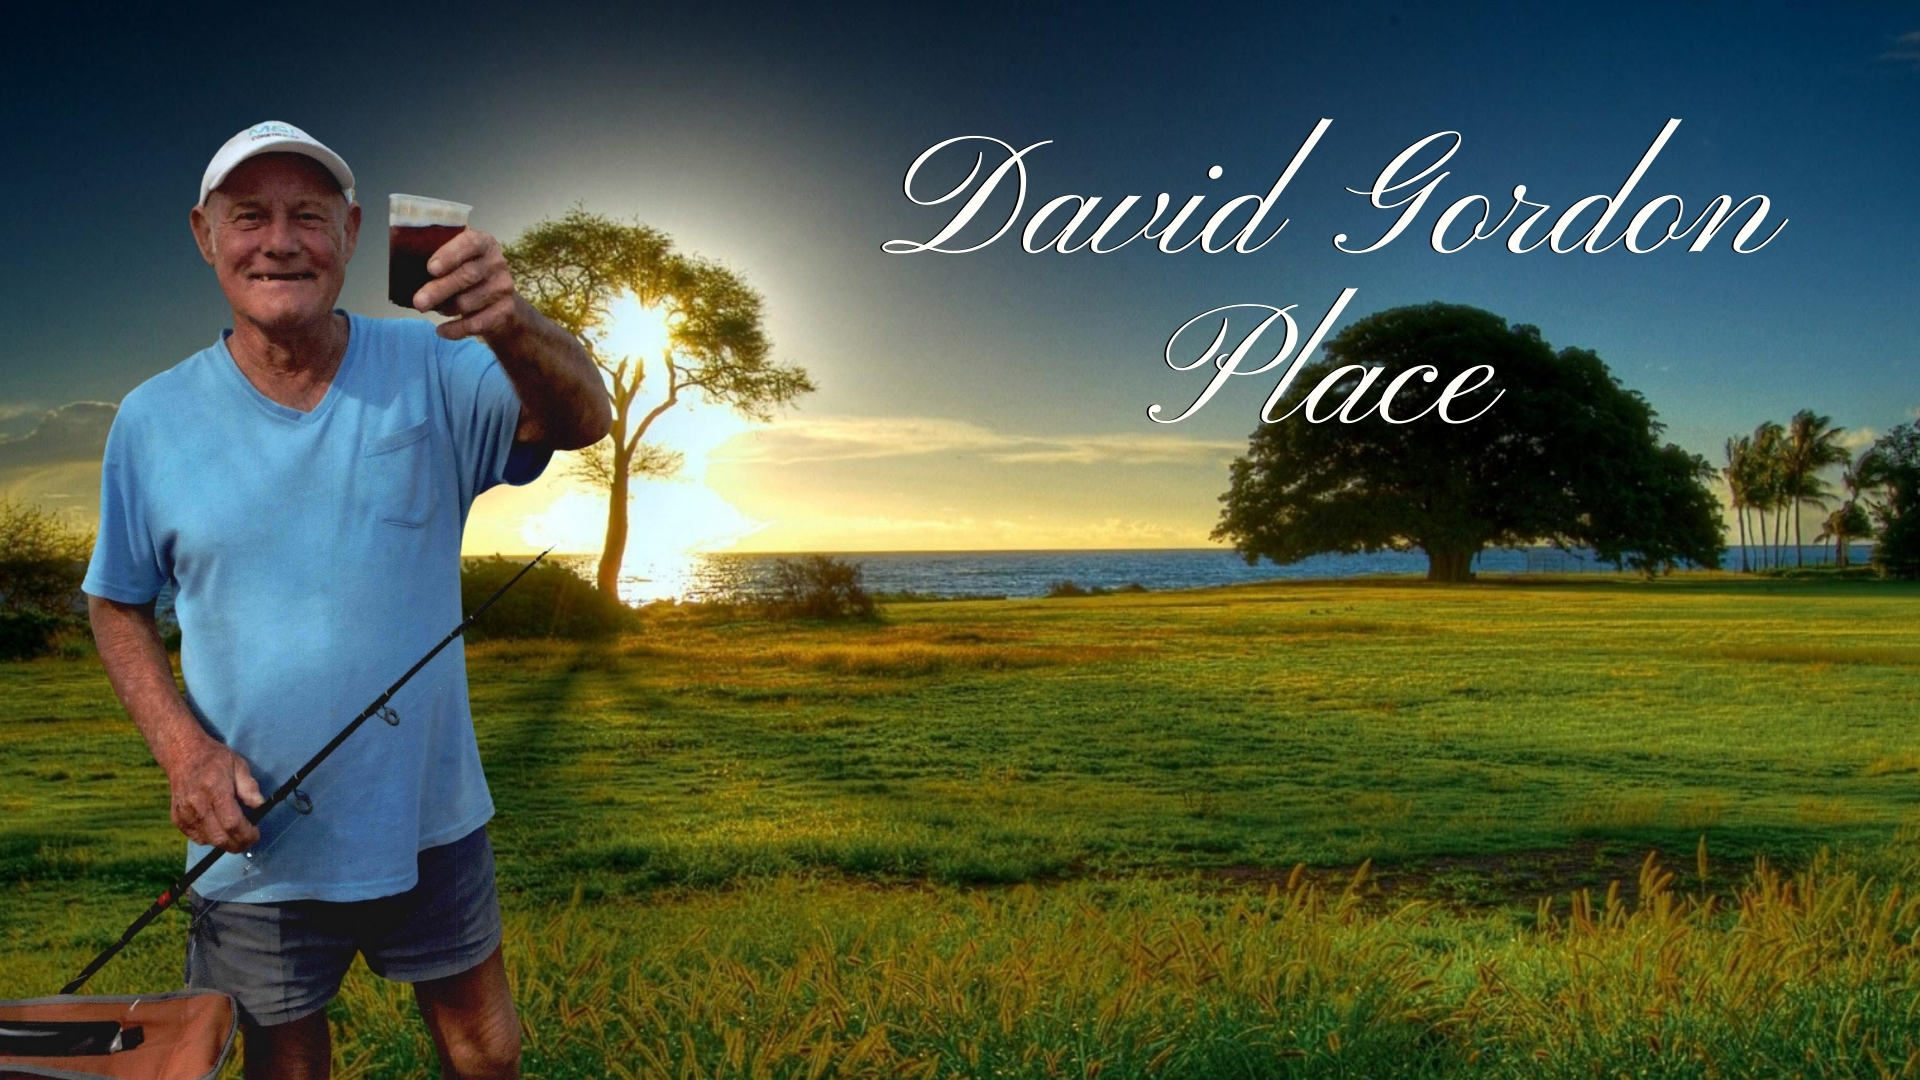 David Gordon Place